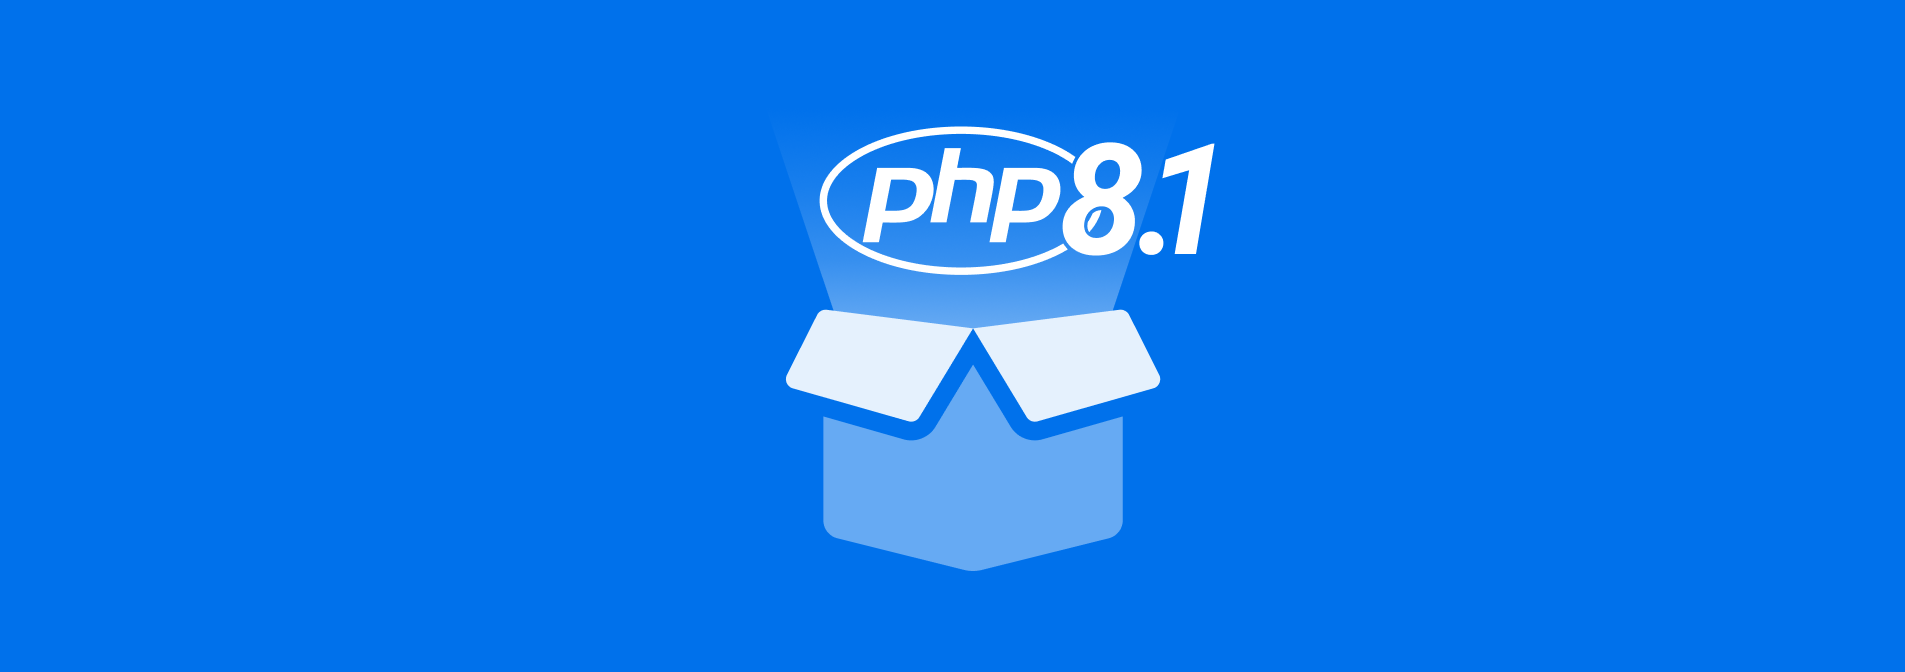 Neue PHP Version 8.1 bei hosting.de